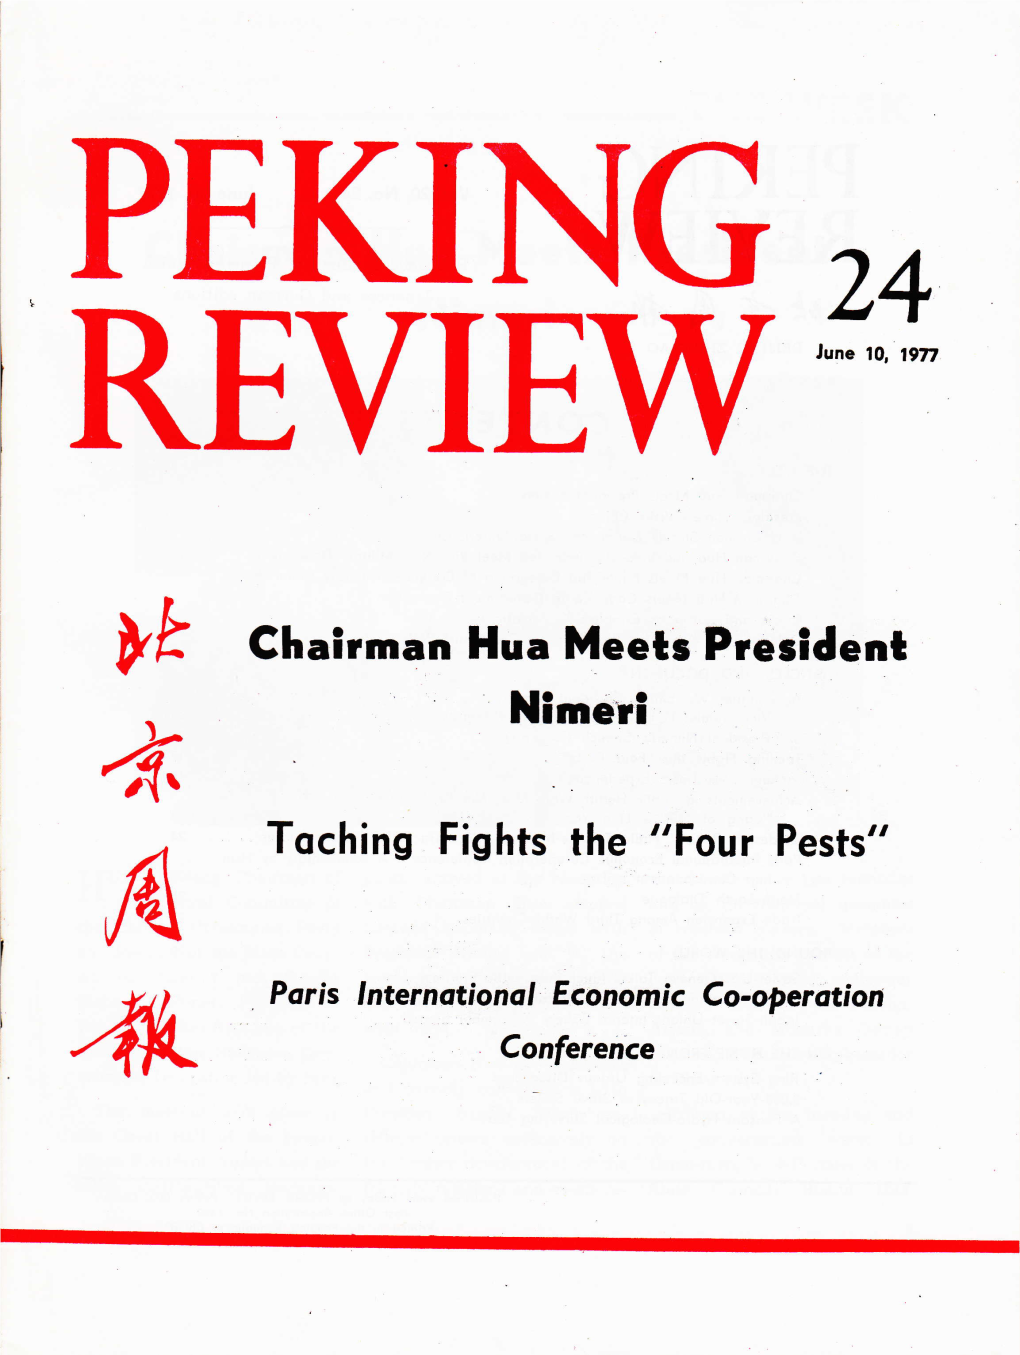 Four Pests" a Poris Lnternational Economic Co-Operotion -{K Conference PEKING Vol